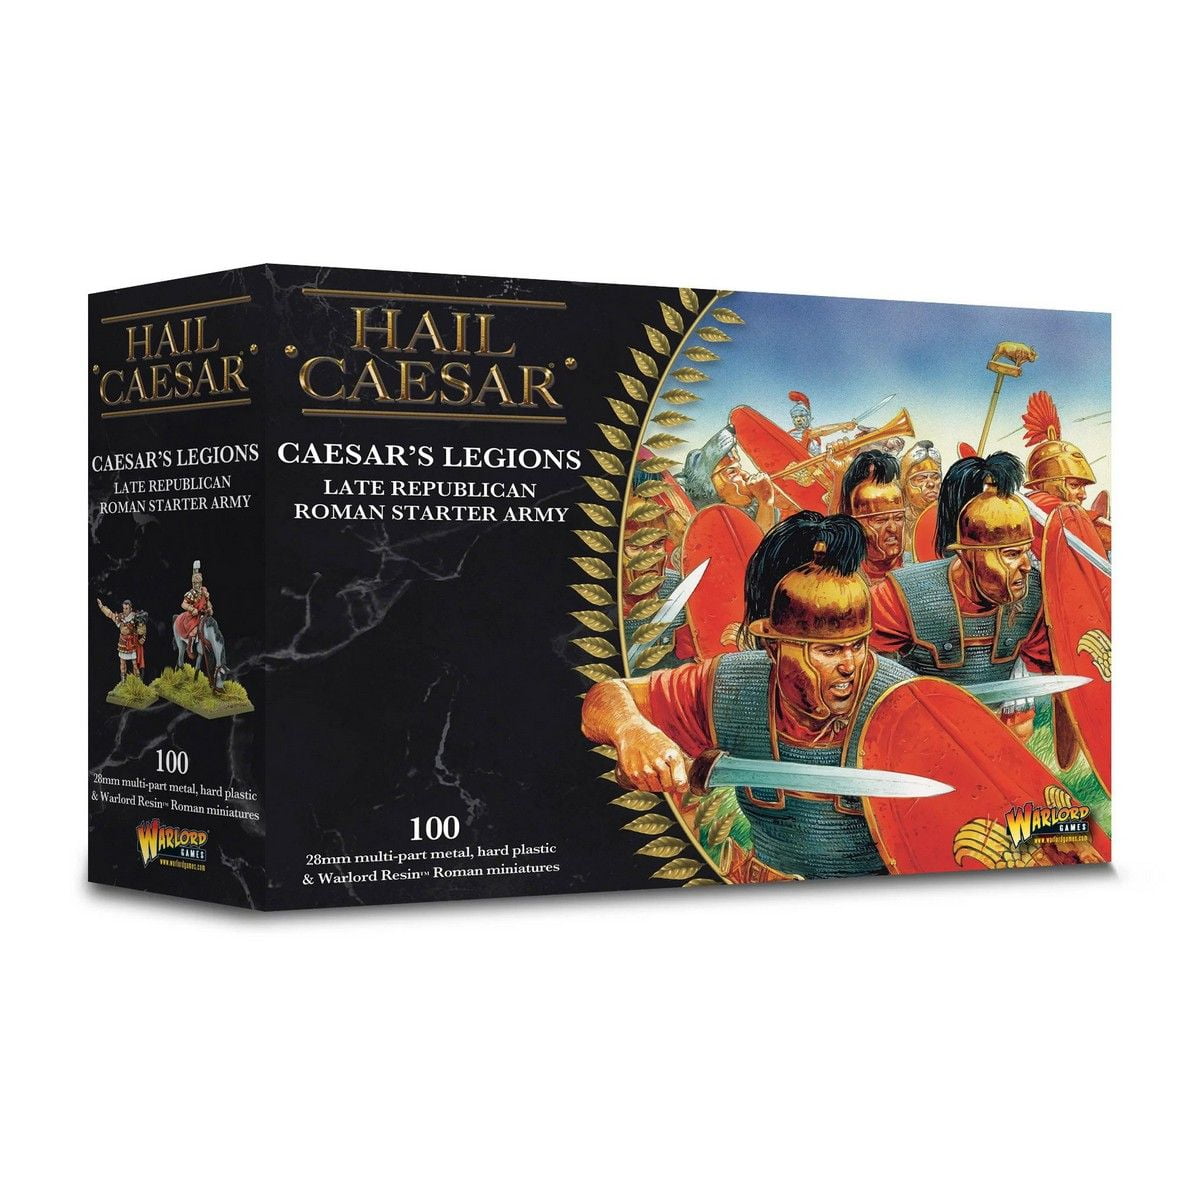 Caesar's Legions: Late Republican Roman Starter Army